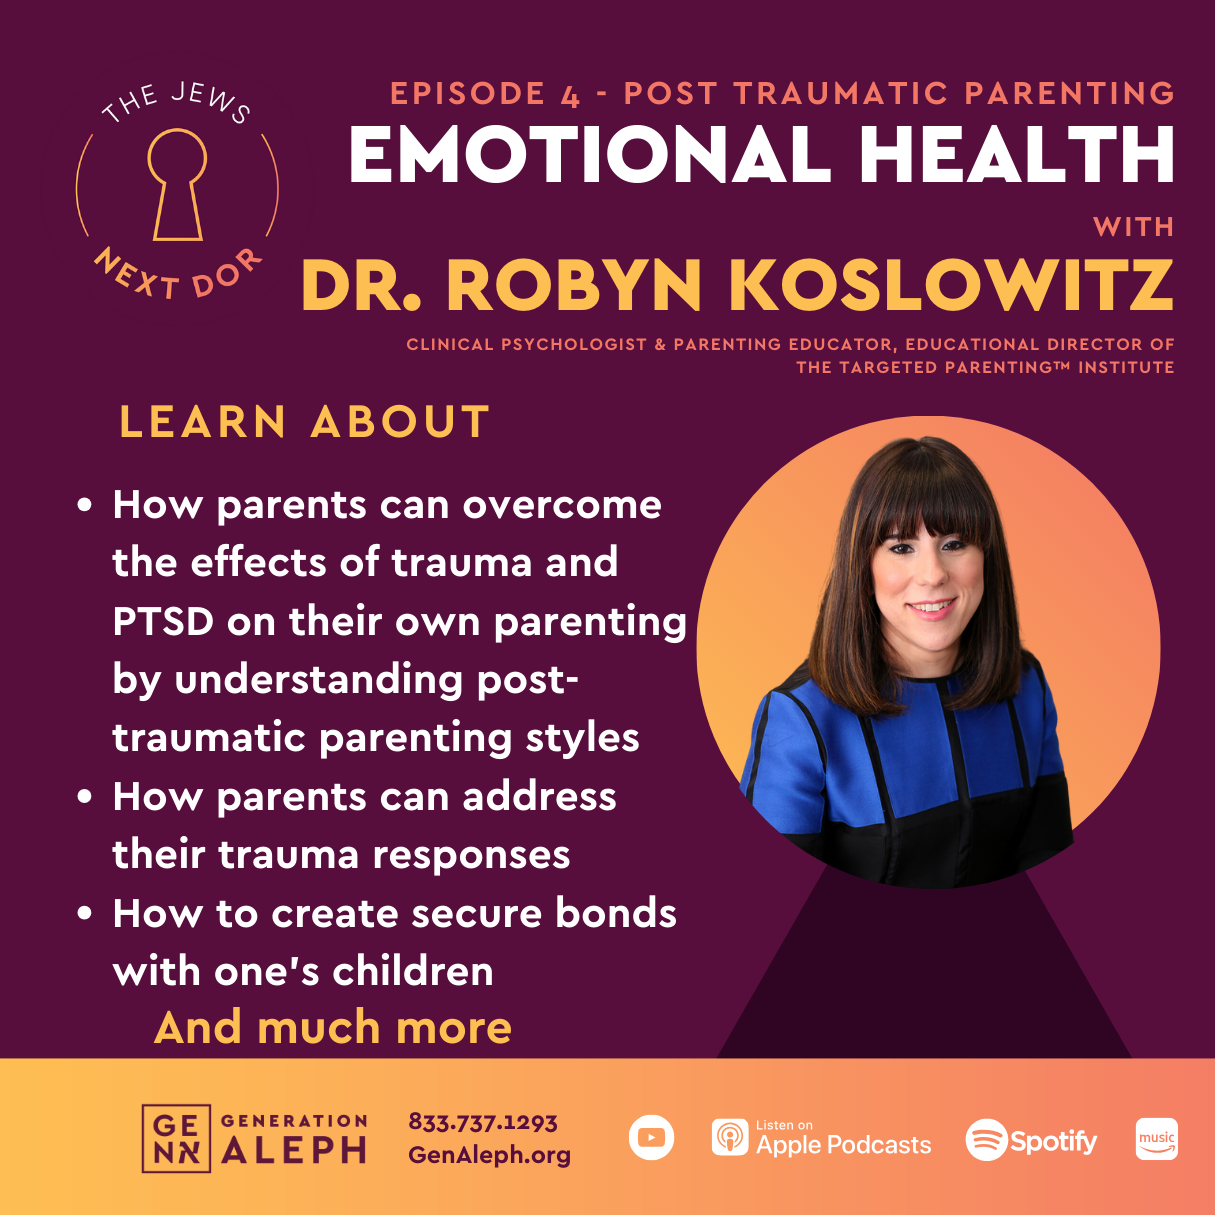 Post Traumatic Parenting – Dr. Robyn Koslowitz